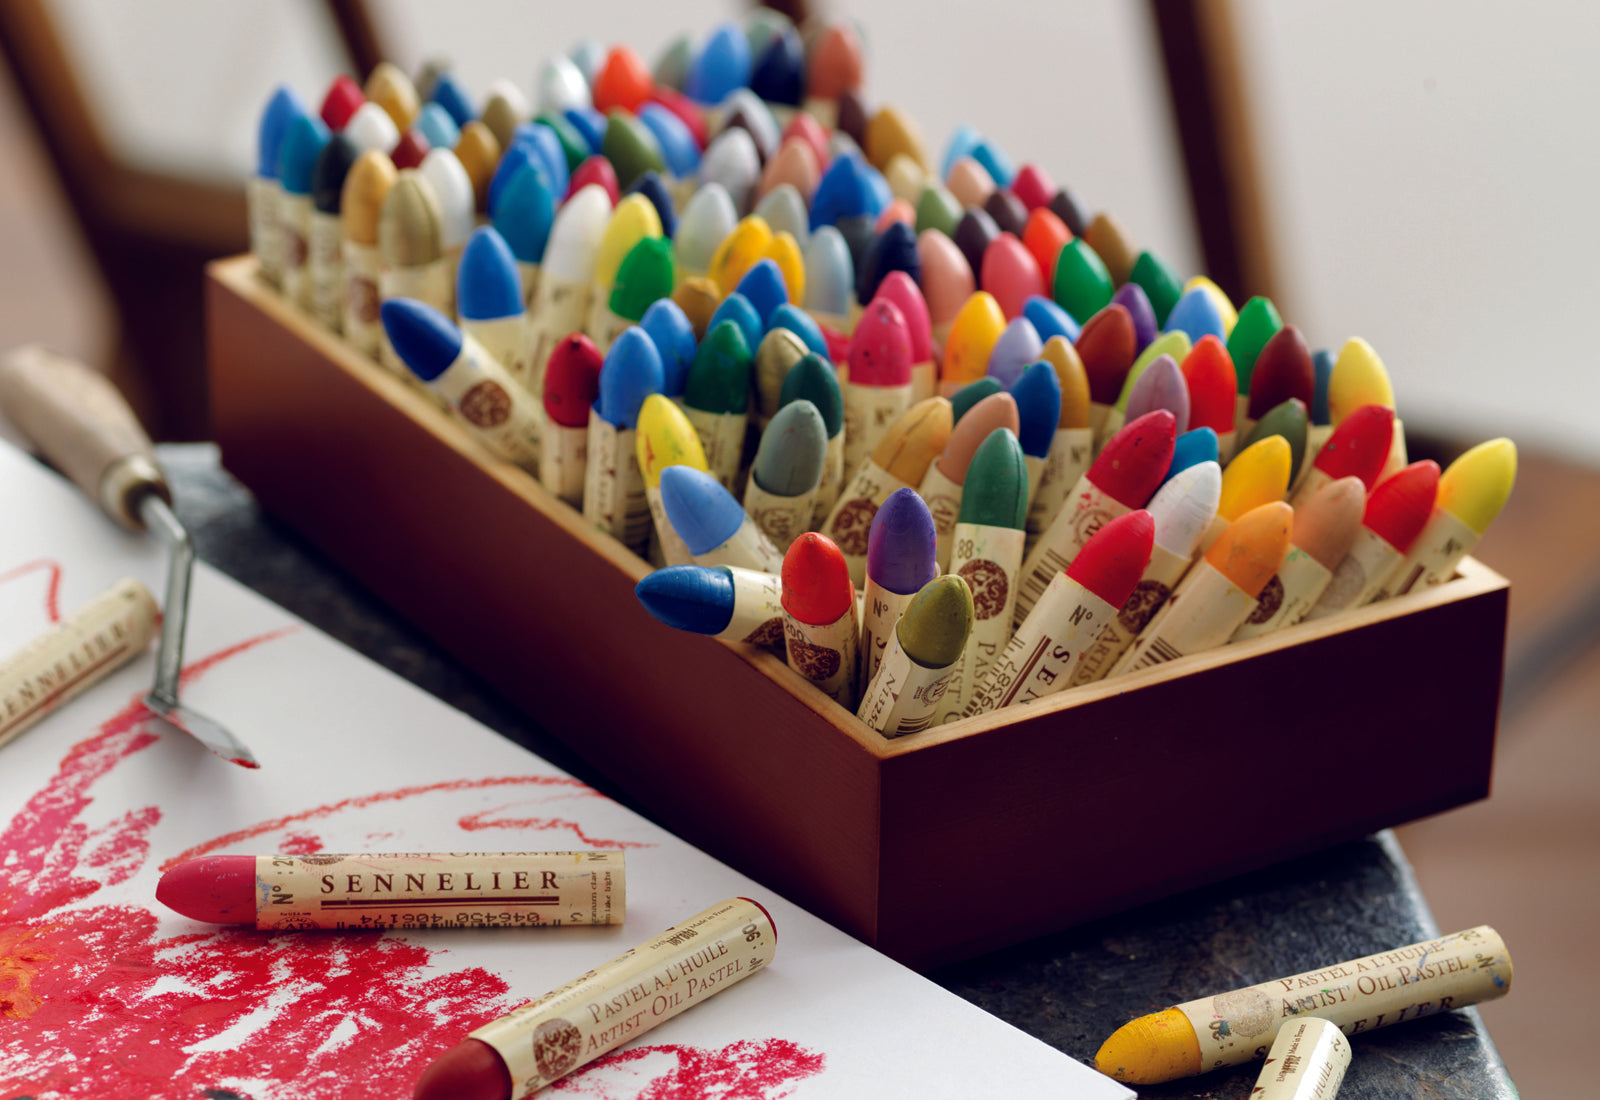 Cretacolor Charcoal Pencils – Rileystreet Art Supply